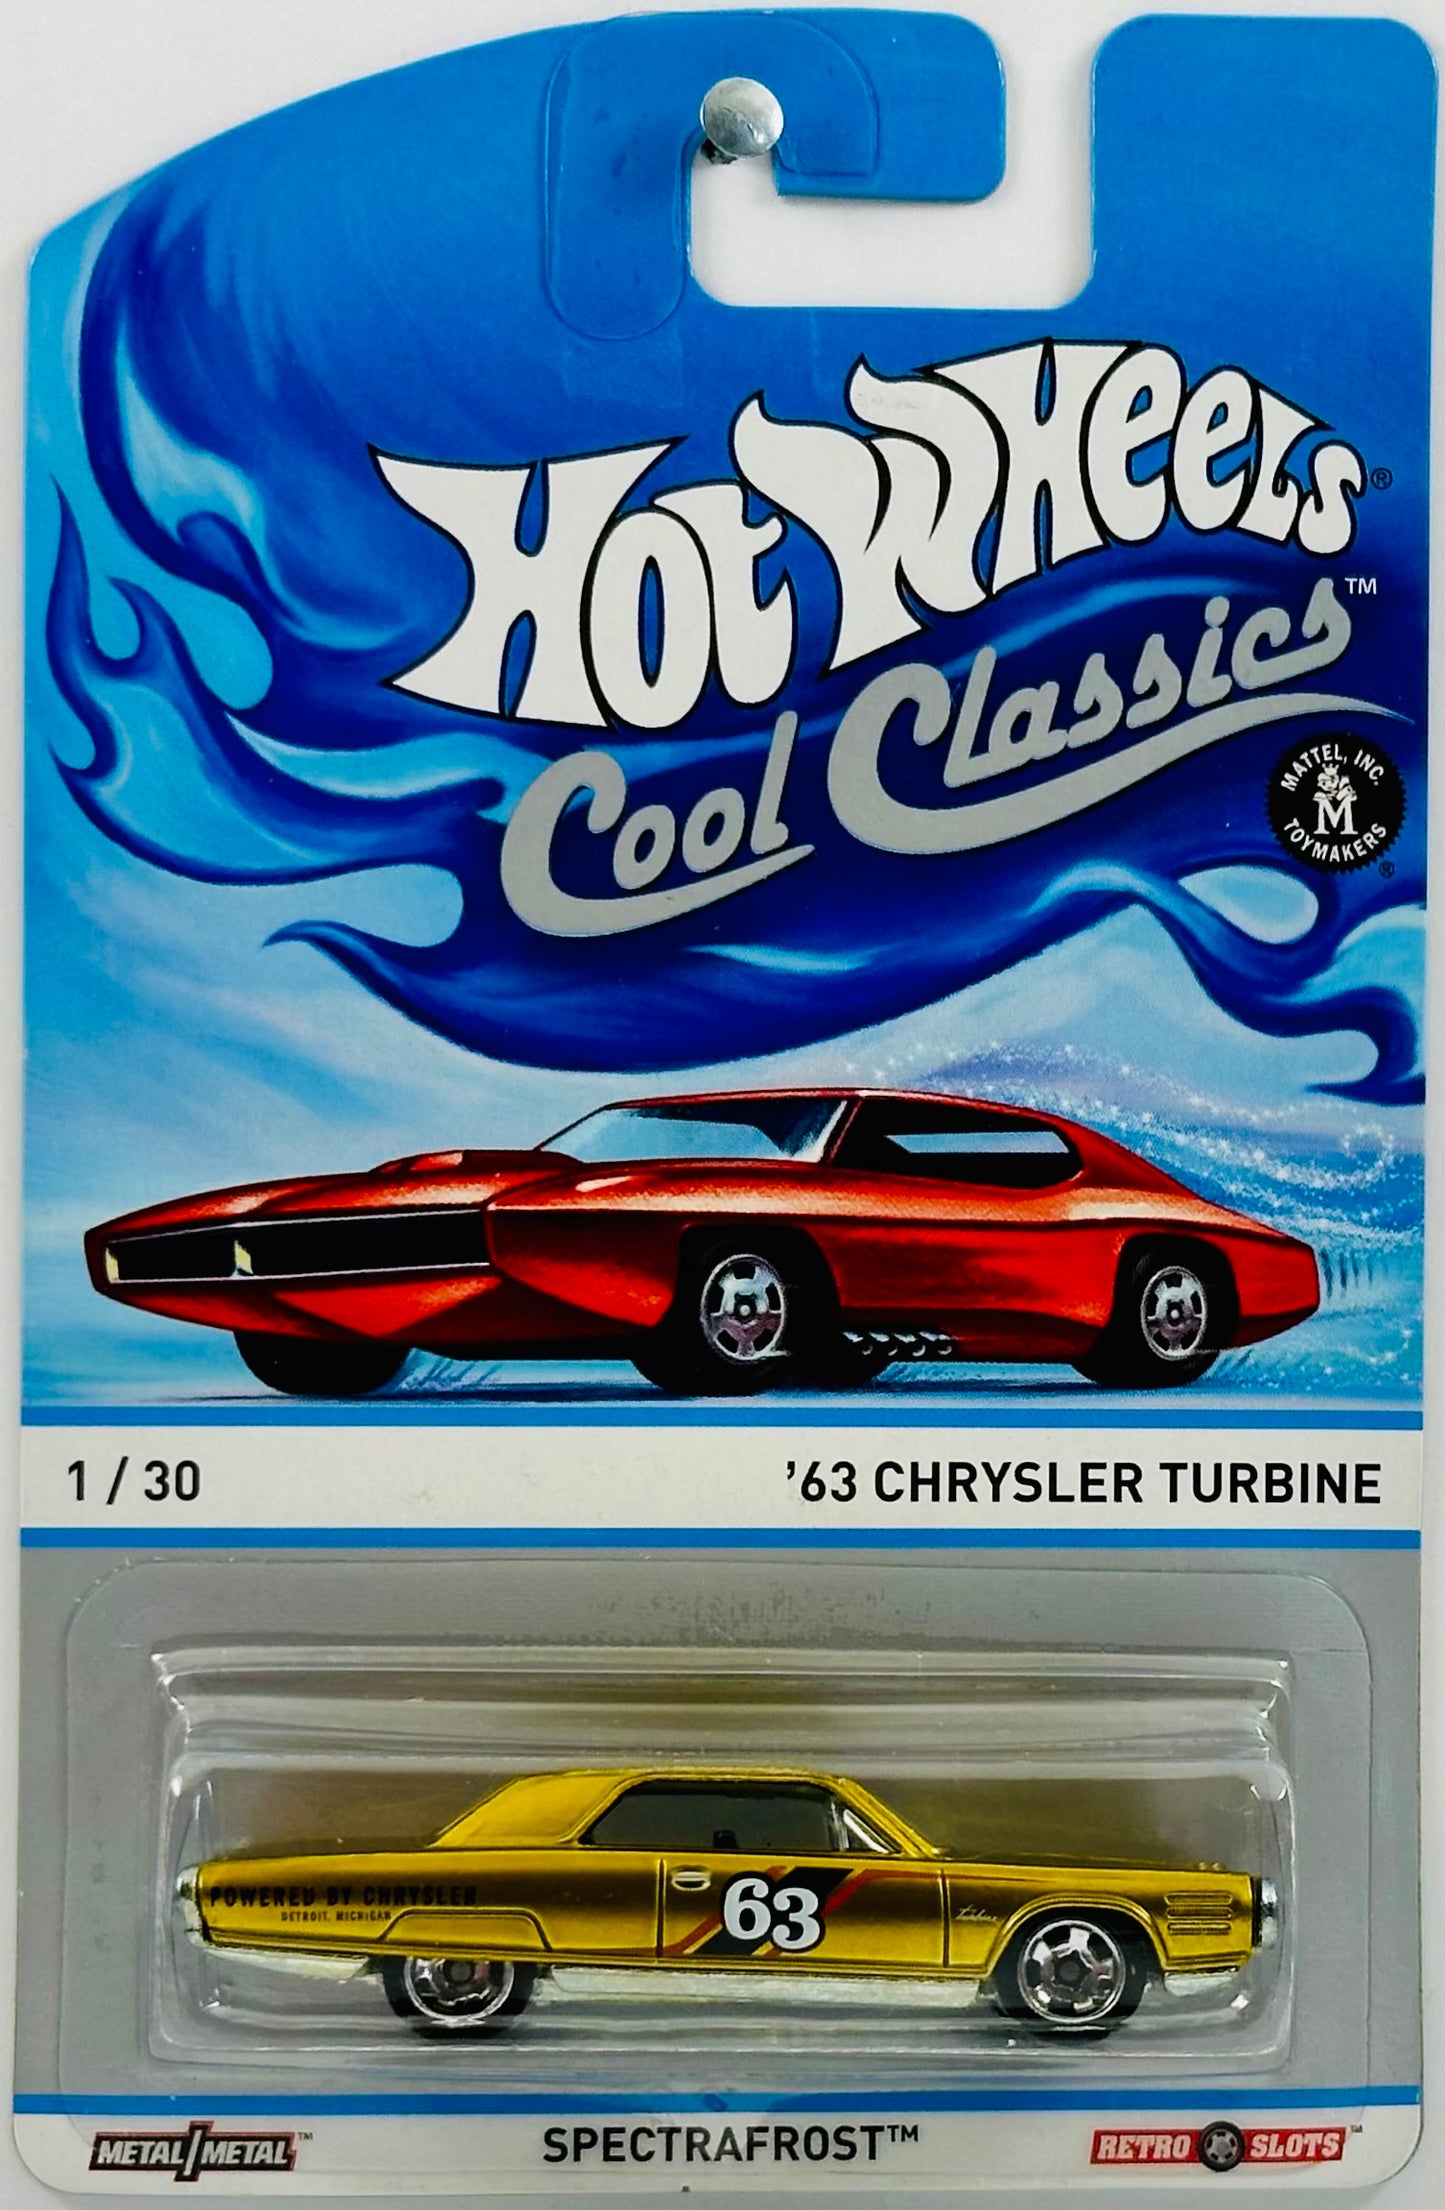 Hot Wheels 2013 - Cool Classics 01/30 - '63 Chrysler Turbine - Spectrafrost Gold - Metal/Metal & Retro Slots - Red Car Card